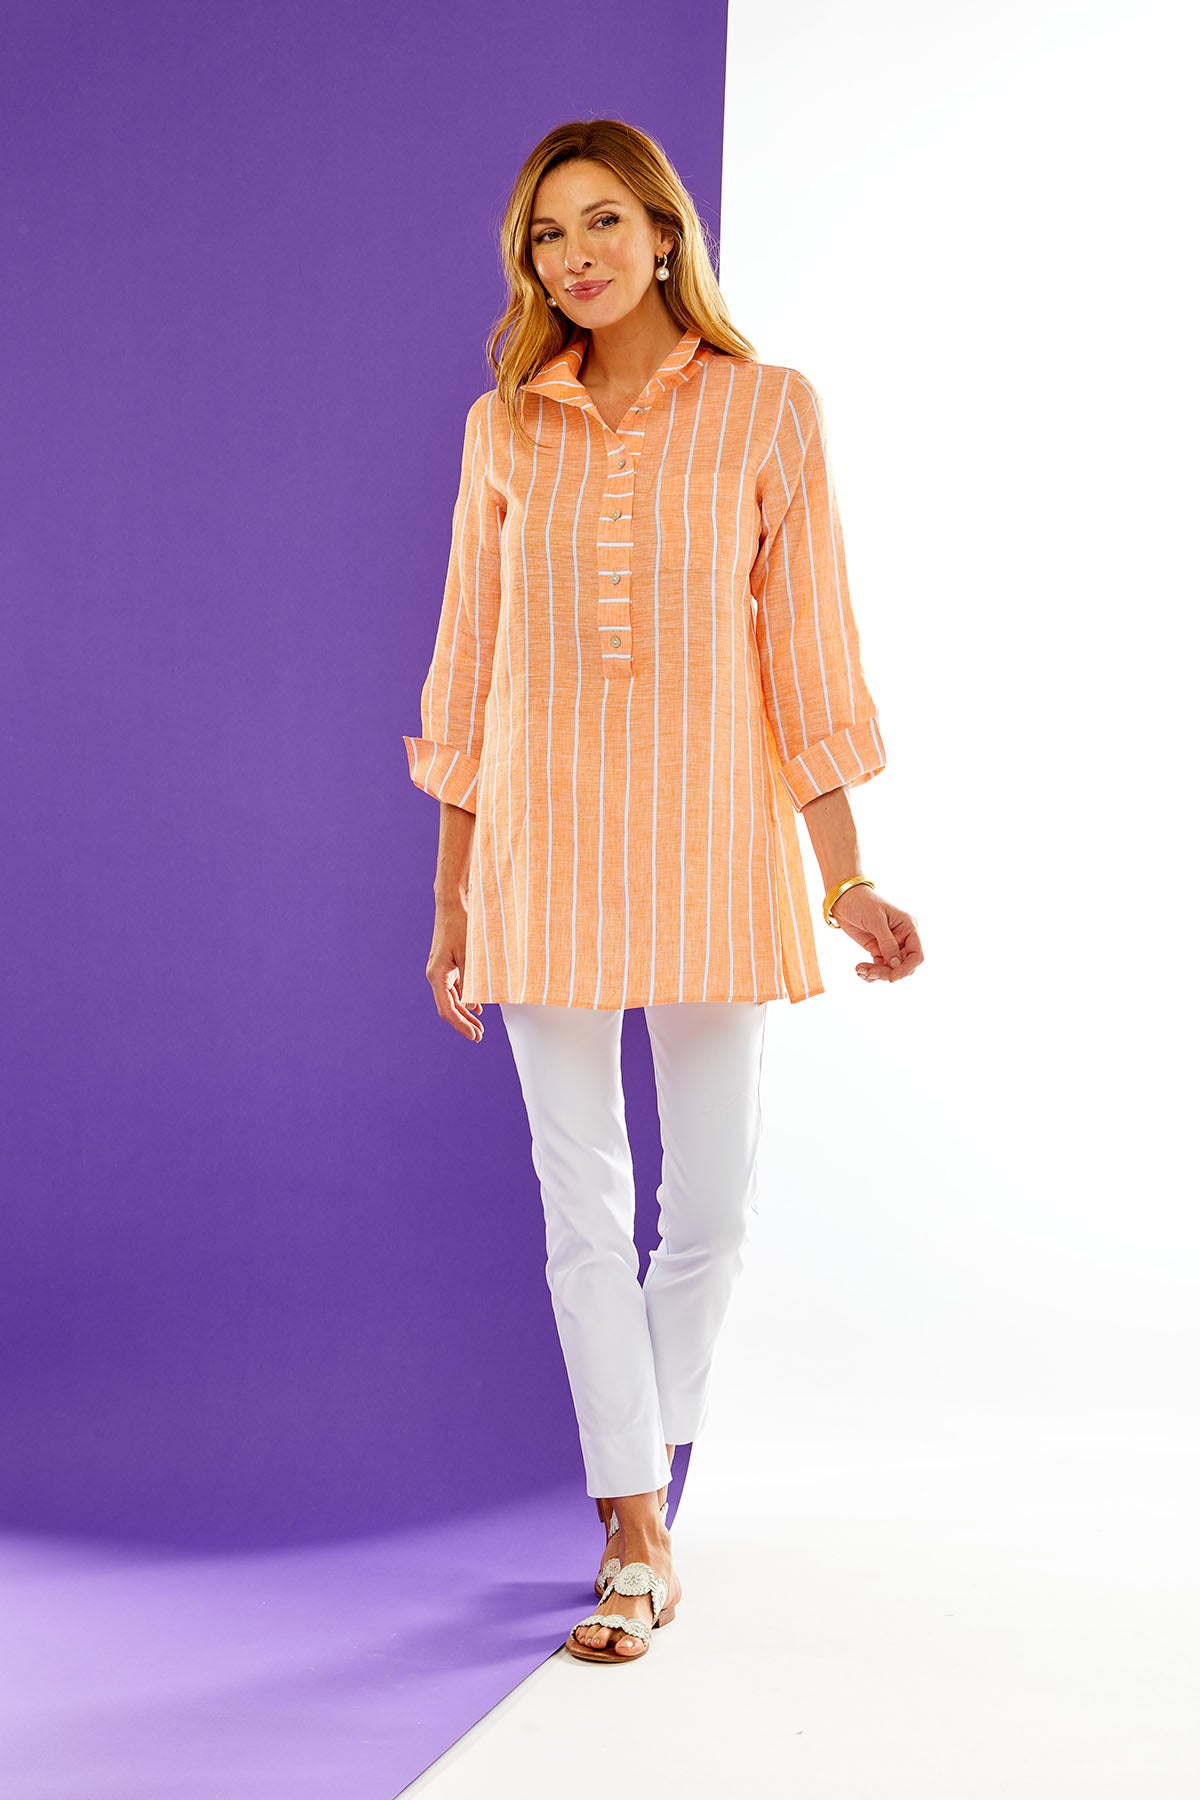 Woman in orange and white stripe tunic